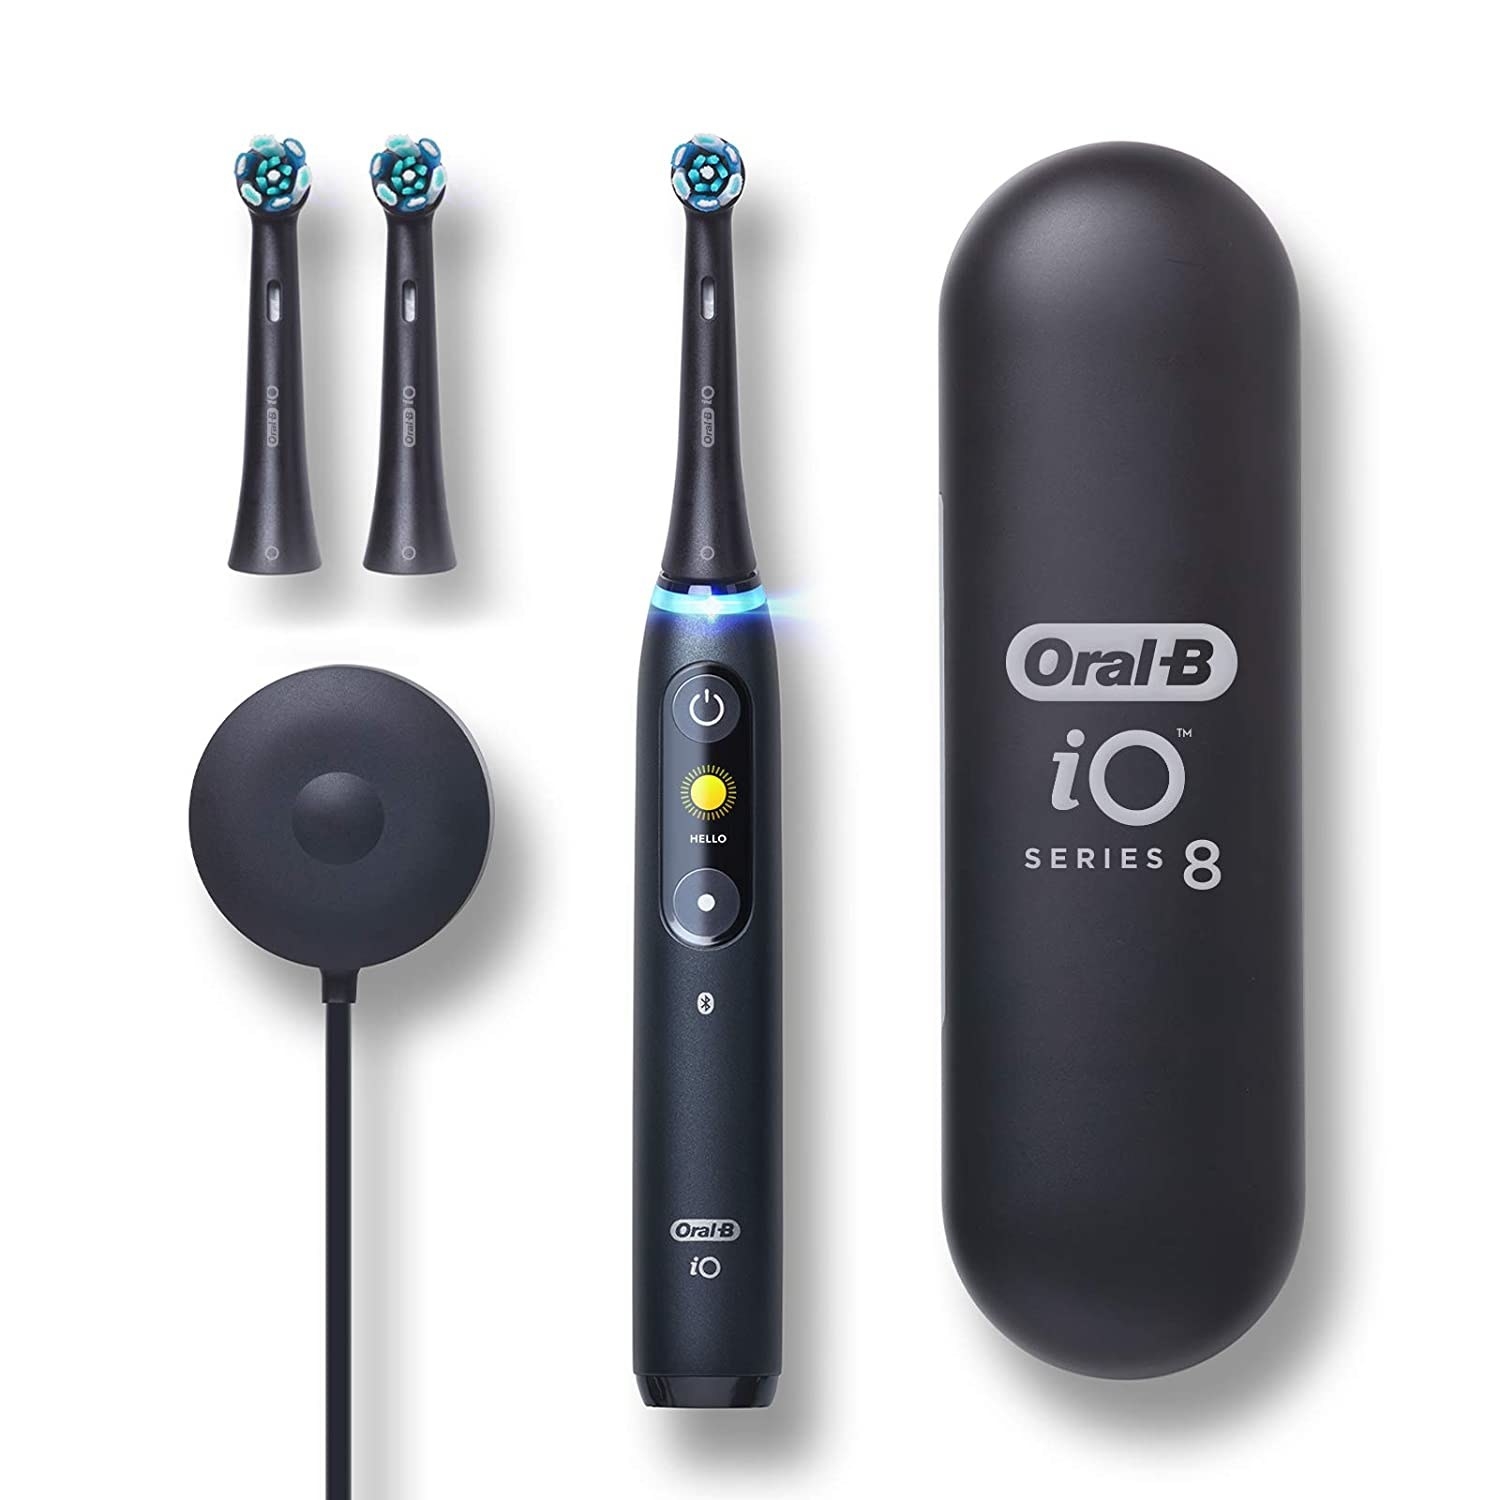 The iO8 toothbrush